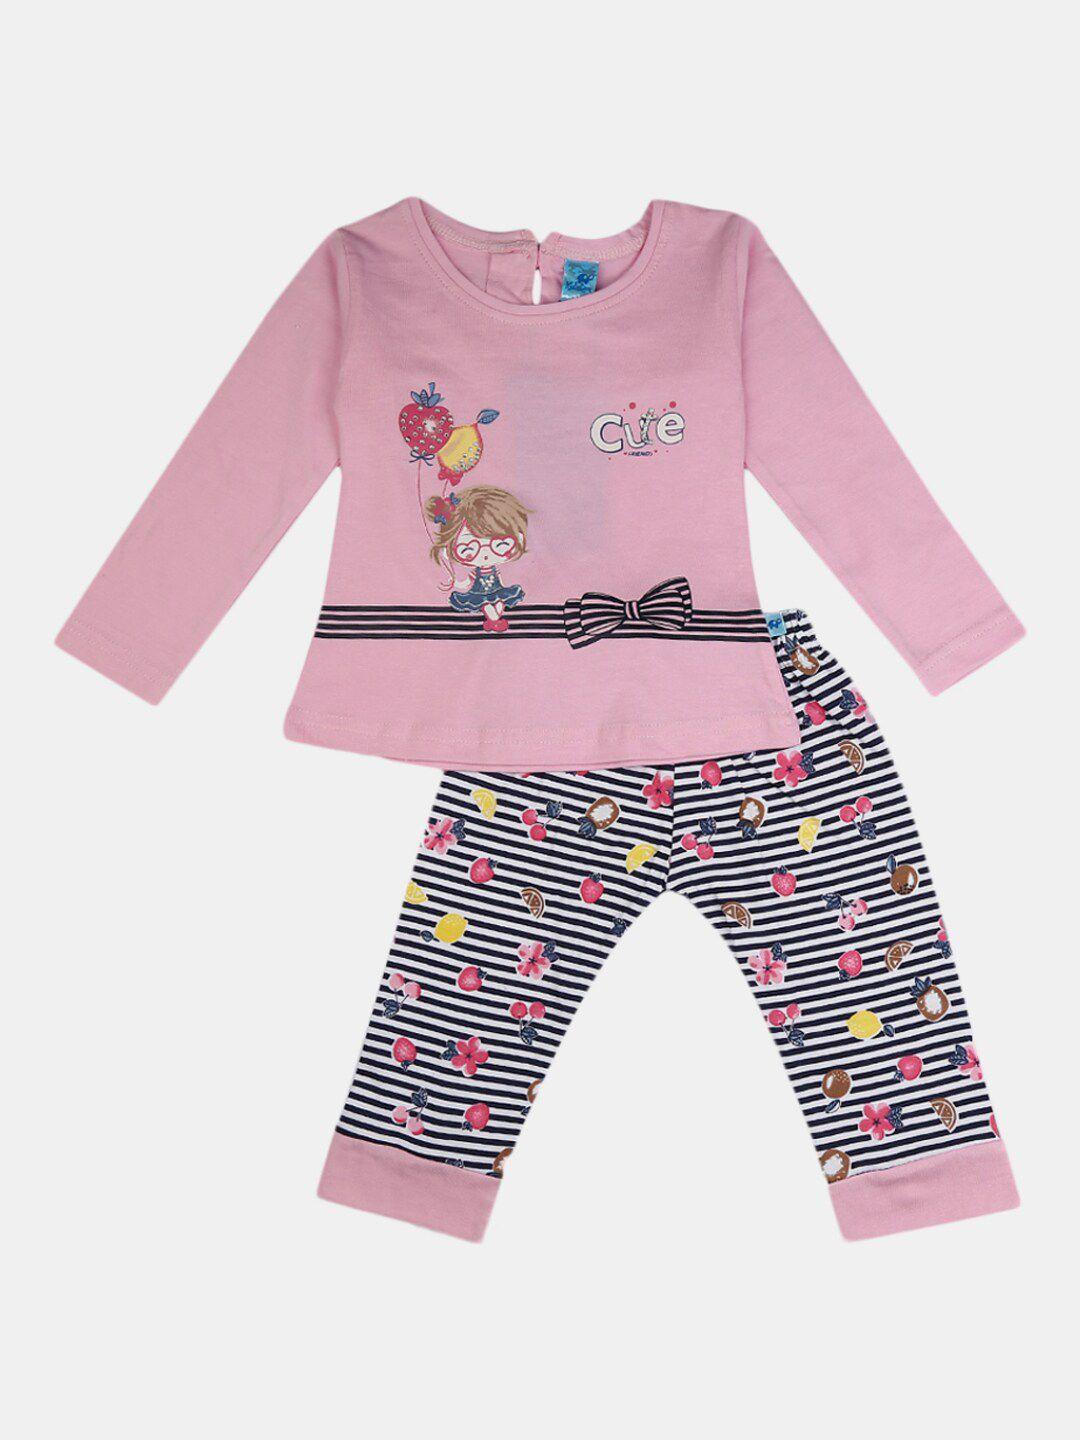 v-mart unisex kids pink & navy blue printed top with pyjamas